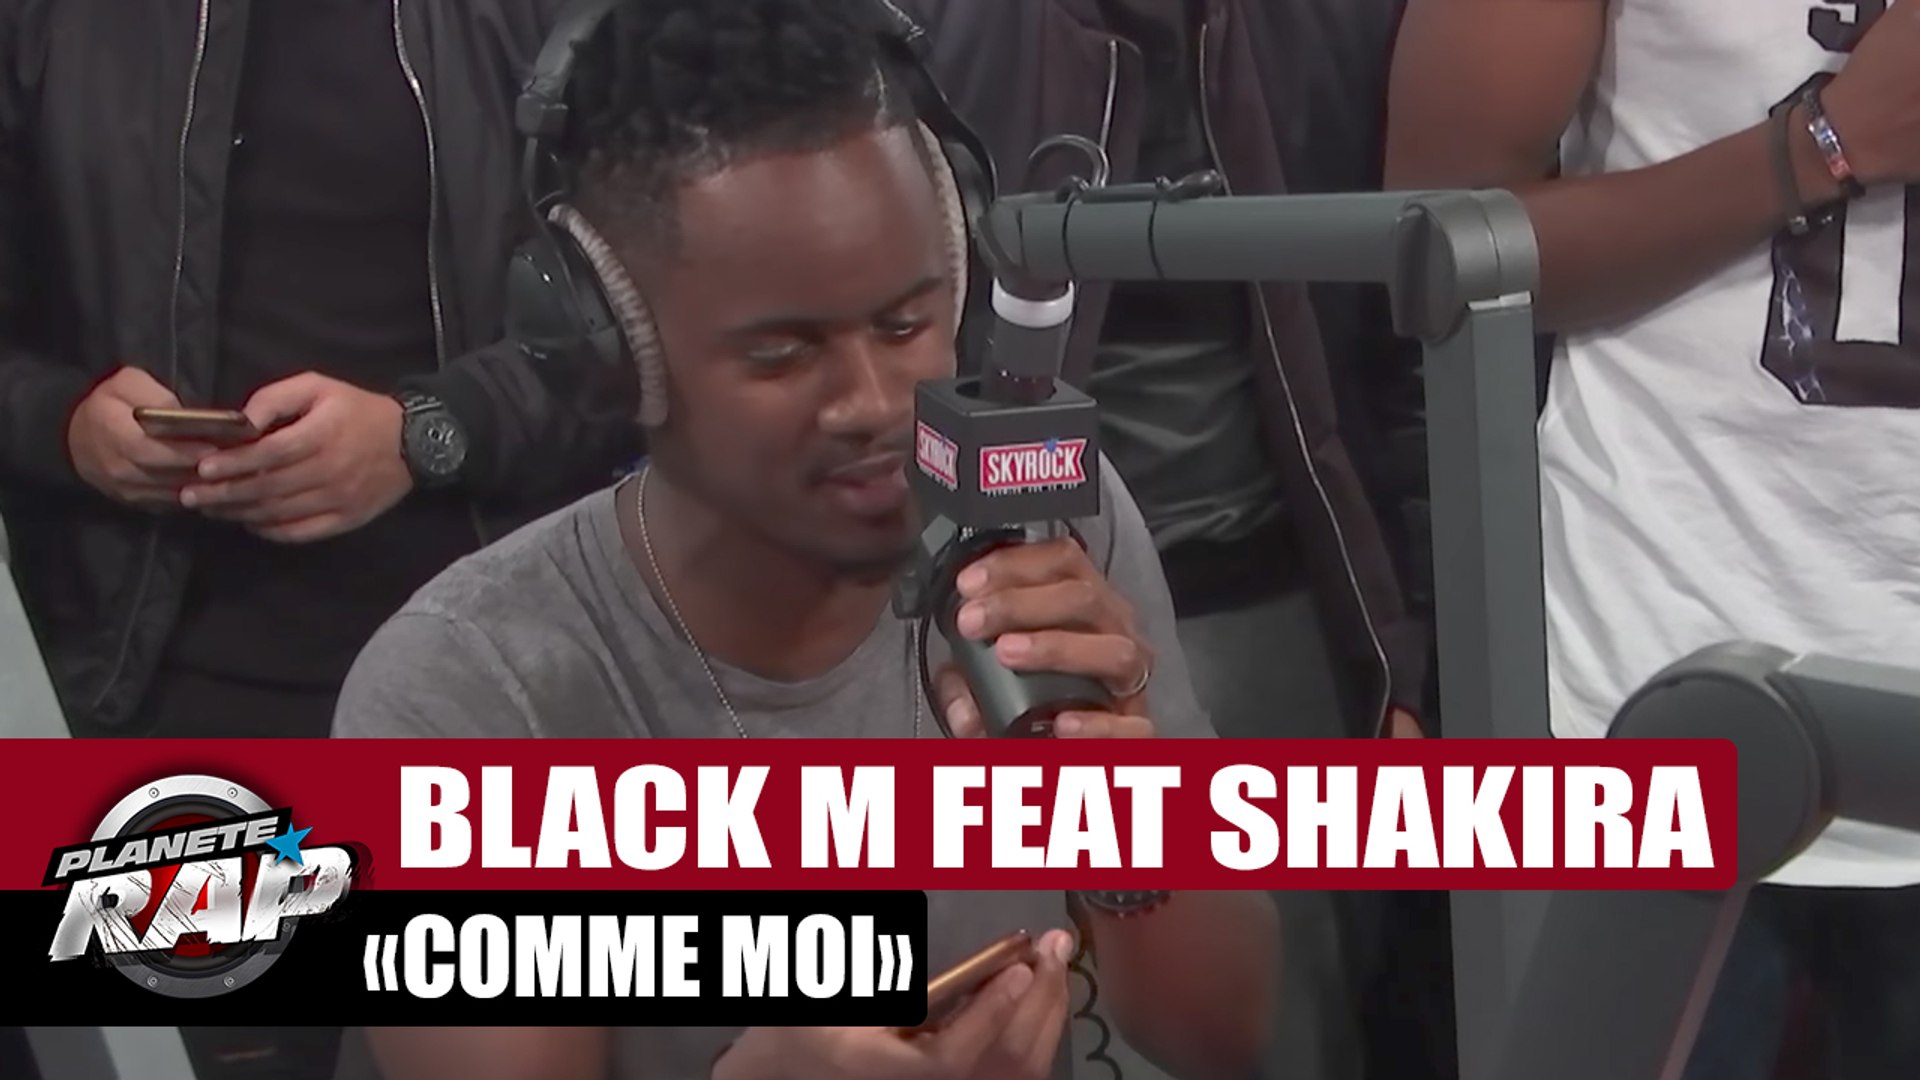 Exclu] Black M Feat. Shakira "Comme moi" en live #PlanèteRap - Vidéo  Dailymotion